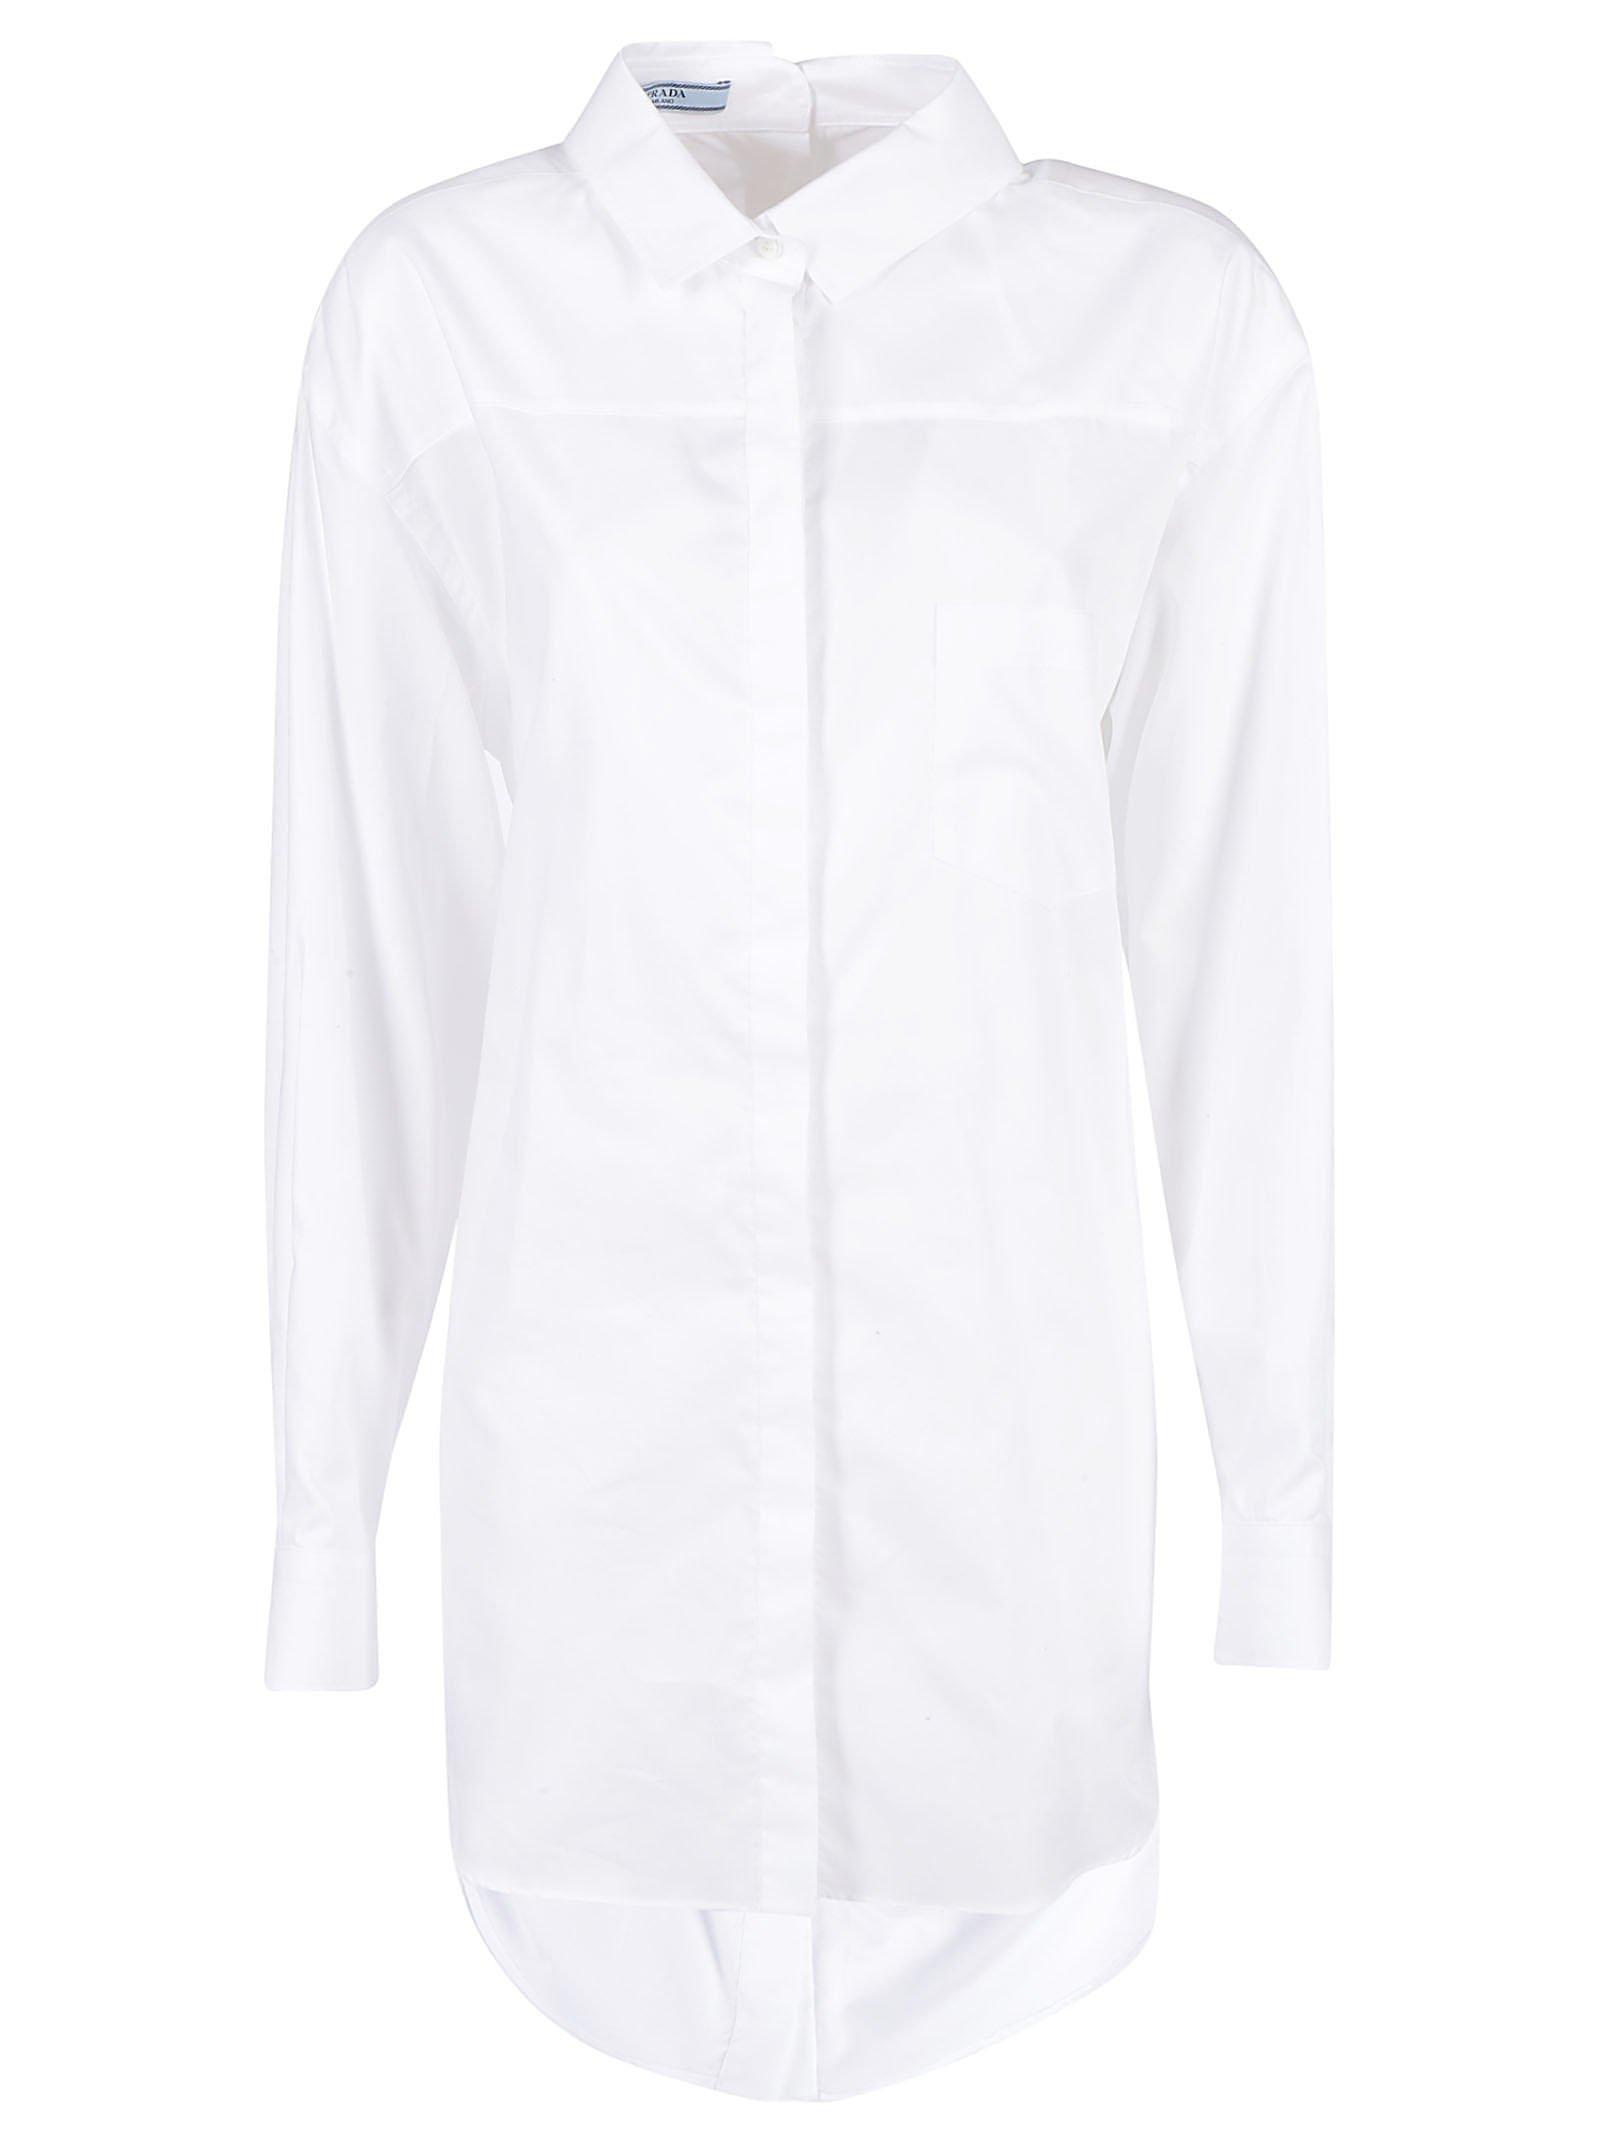 Prada Bow-detail Collared Shirt in White - Lyst